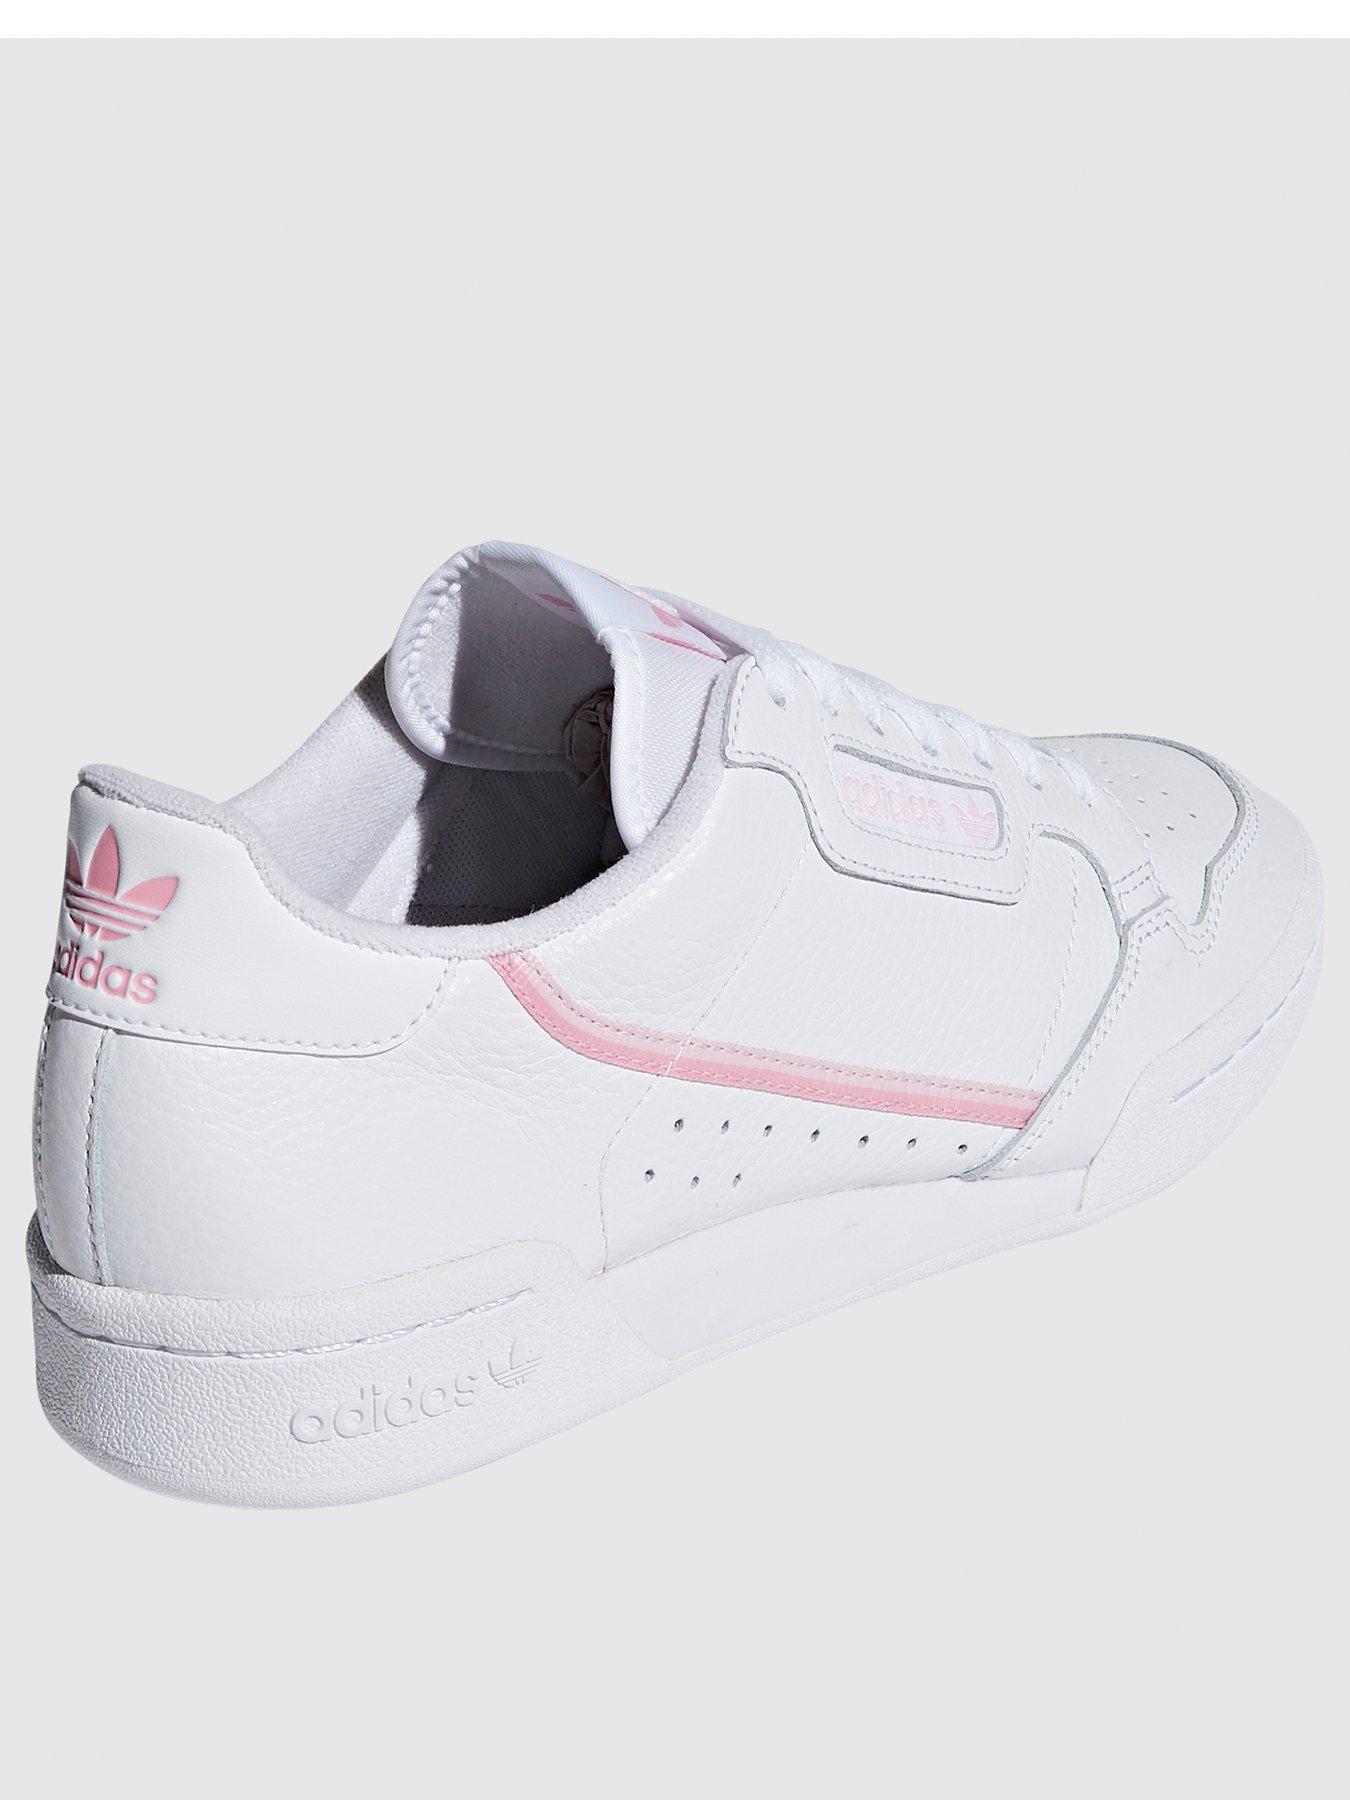 adidas continental 80 pink uk